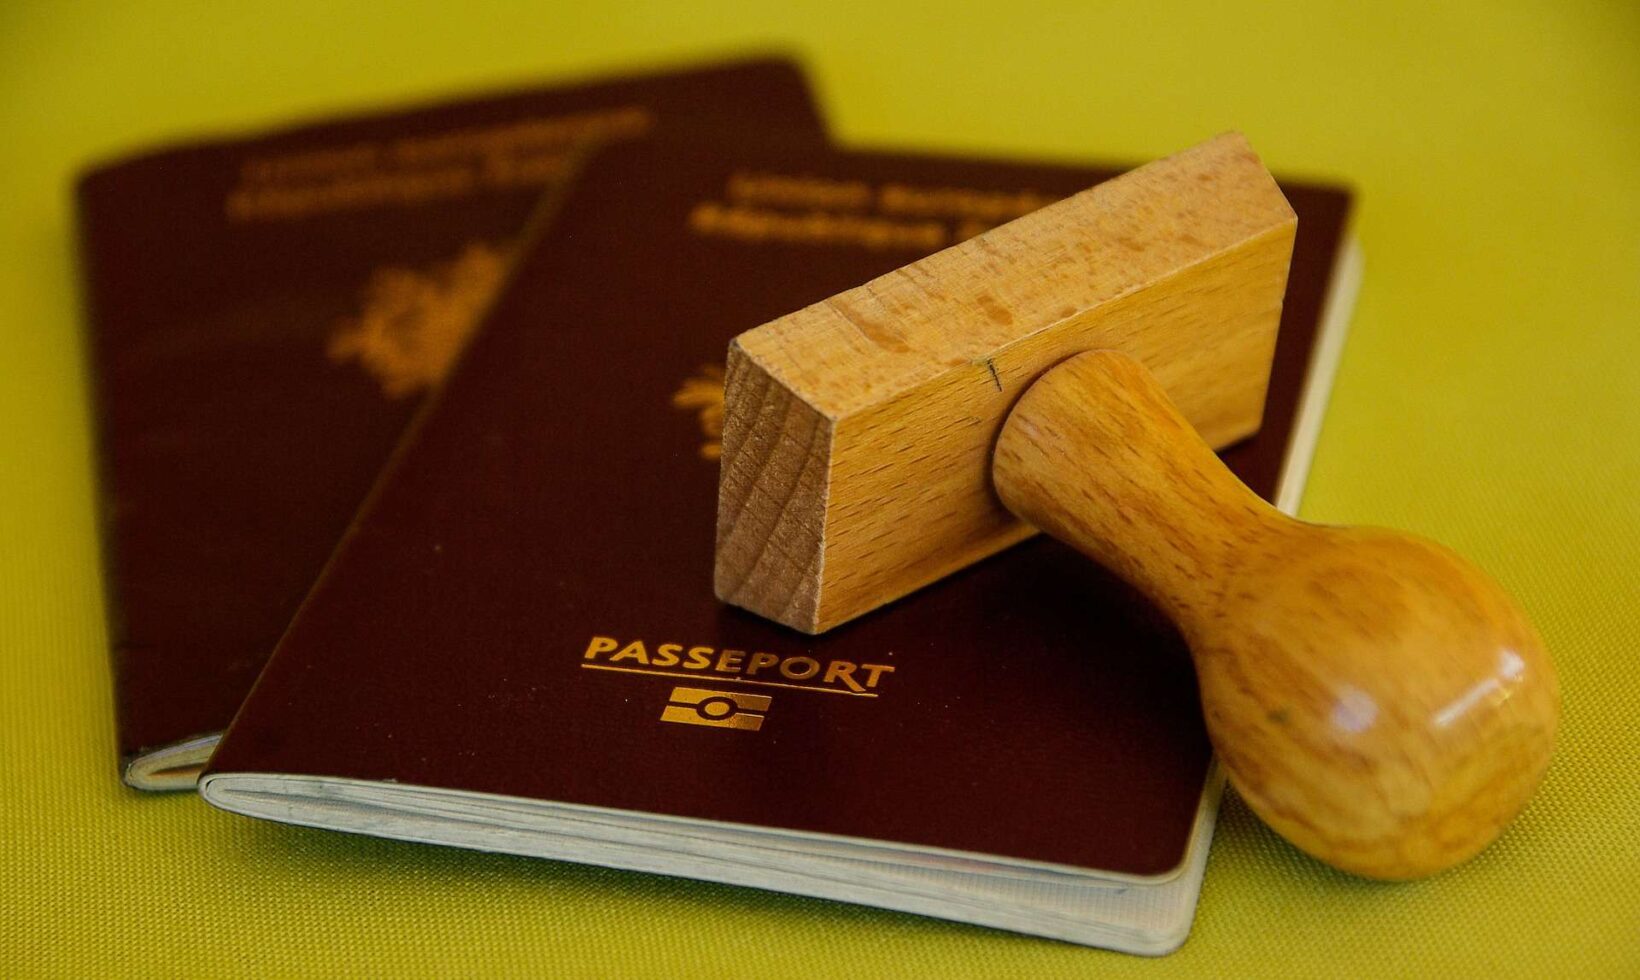 passport with visa stamp, visa to Belarus